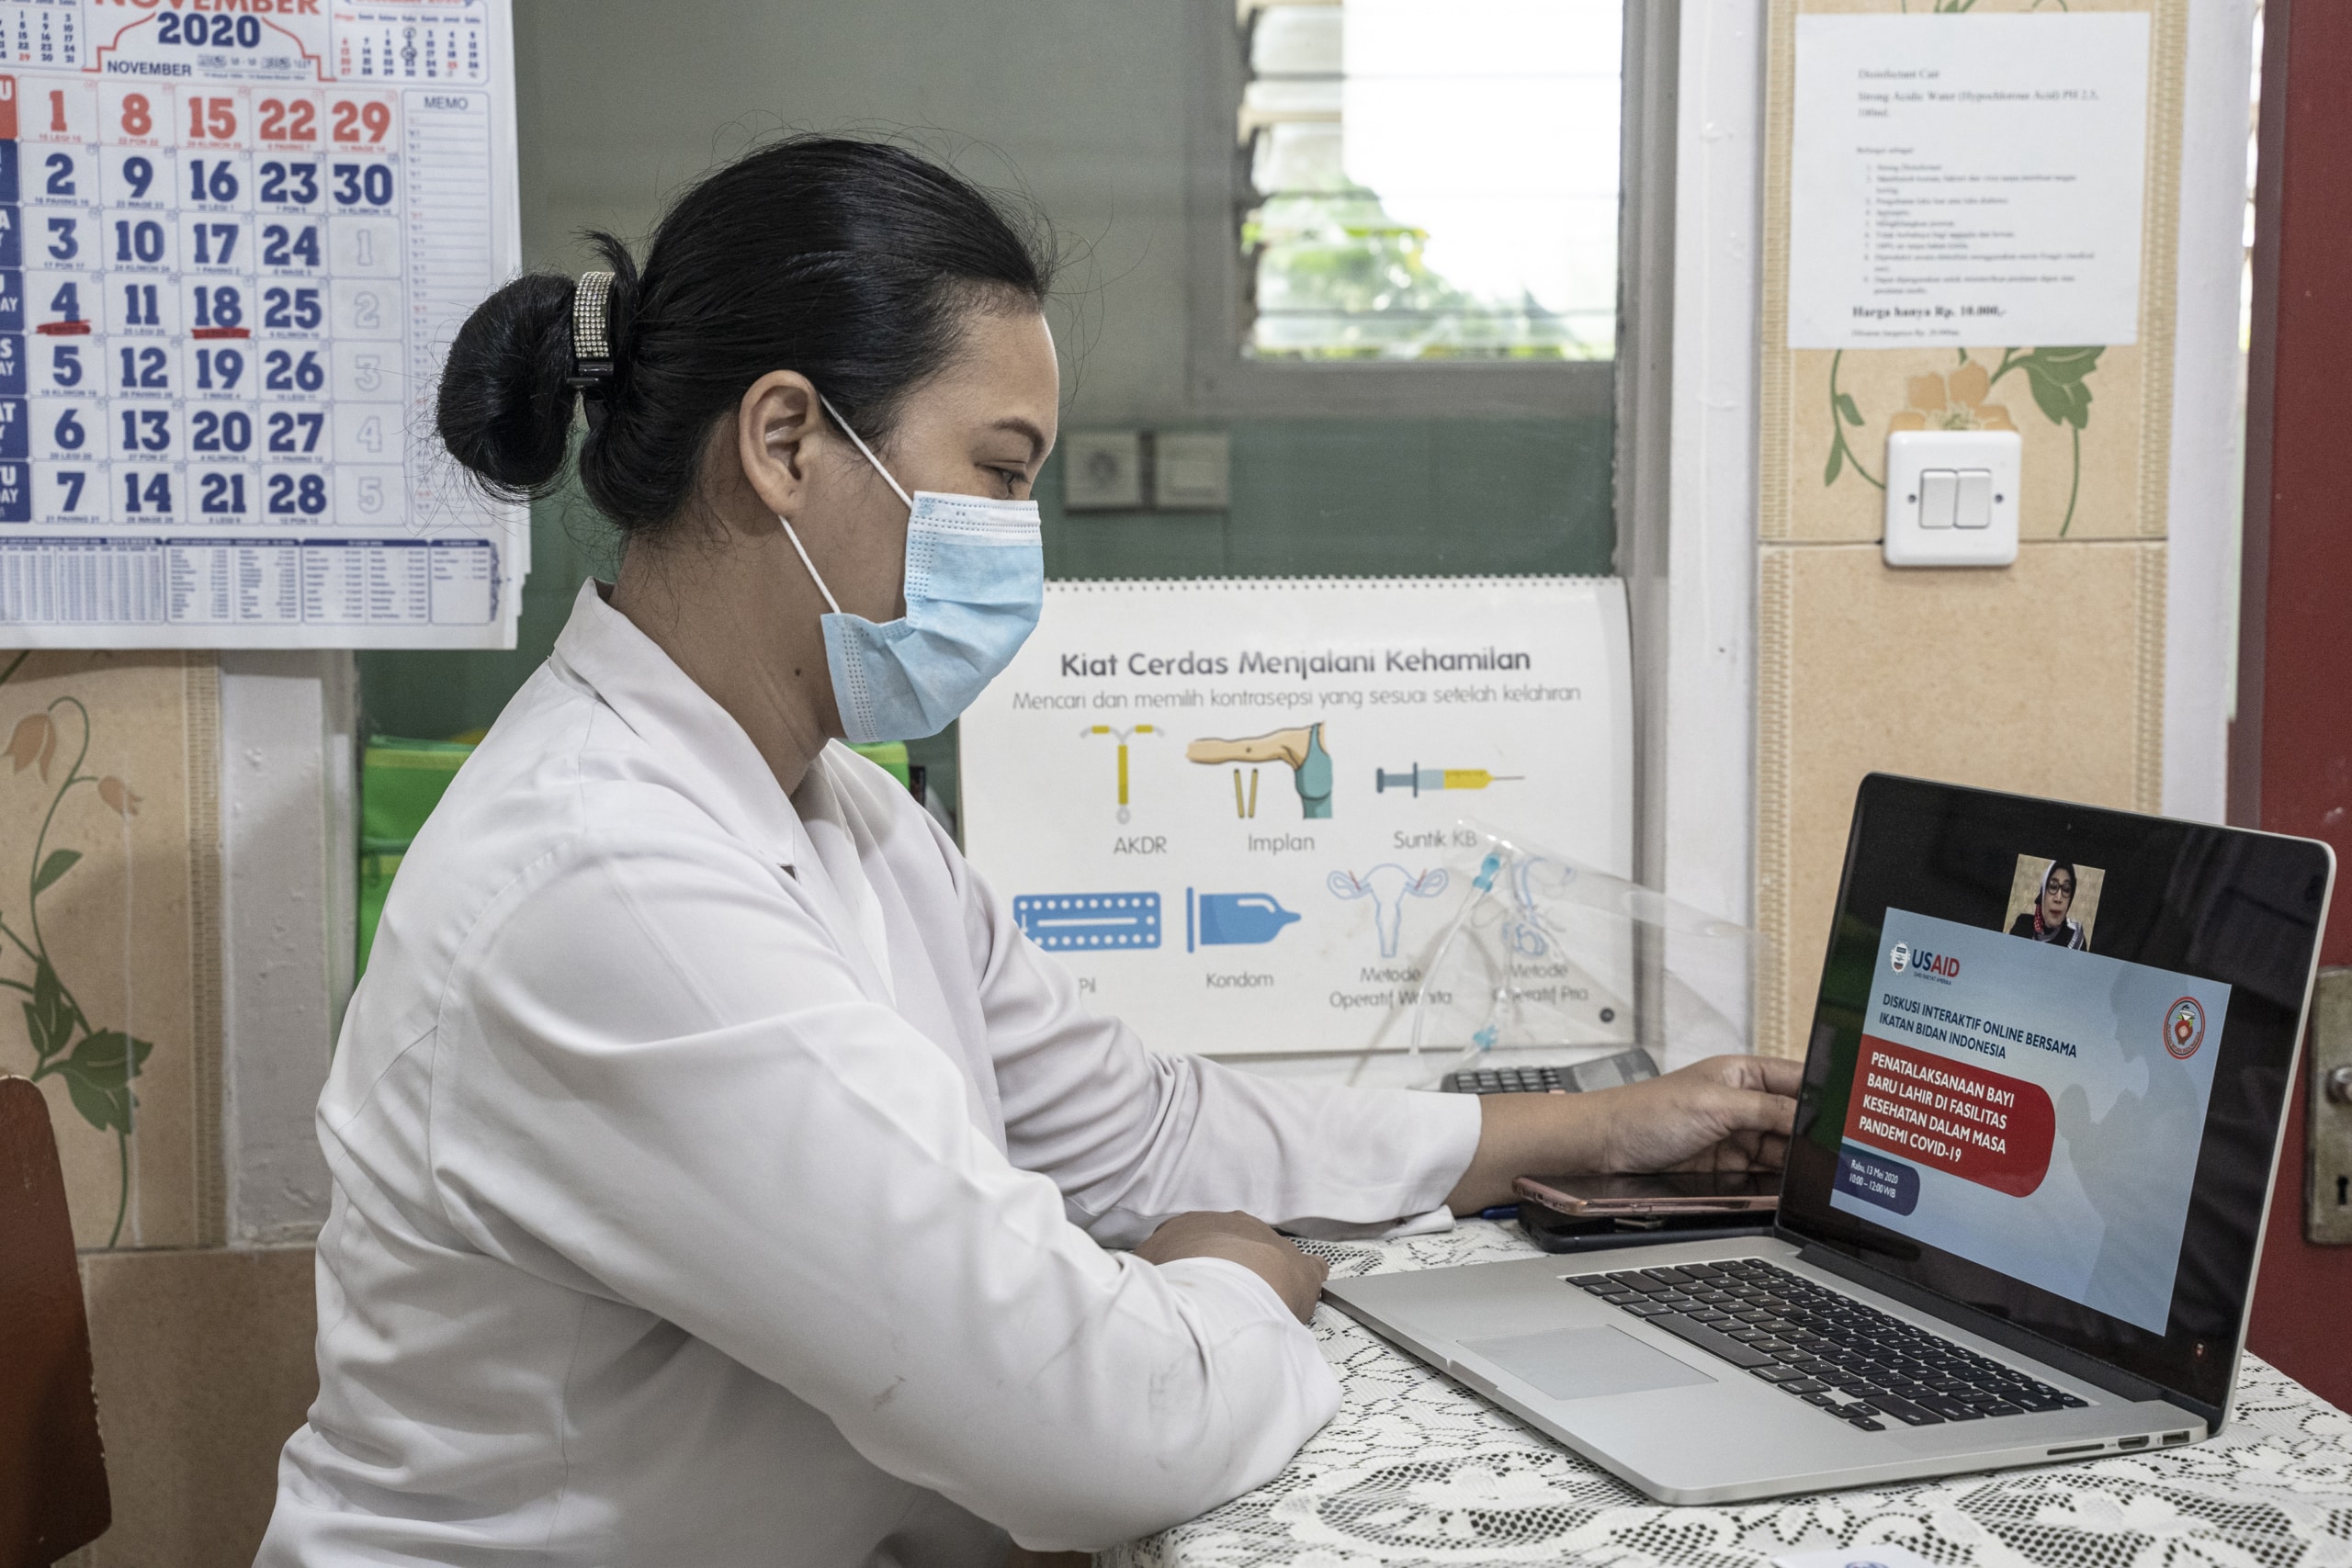 Midwife in Tangerang joining an online seminar.